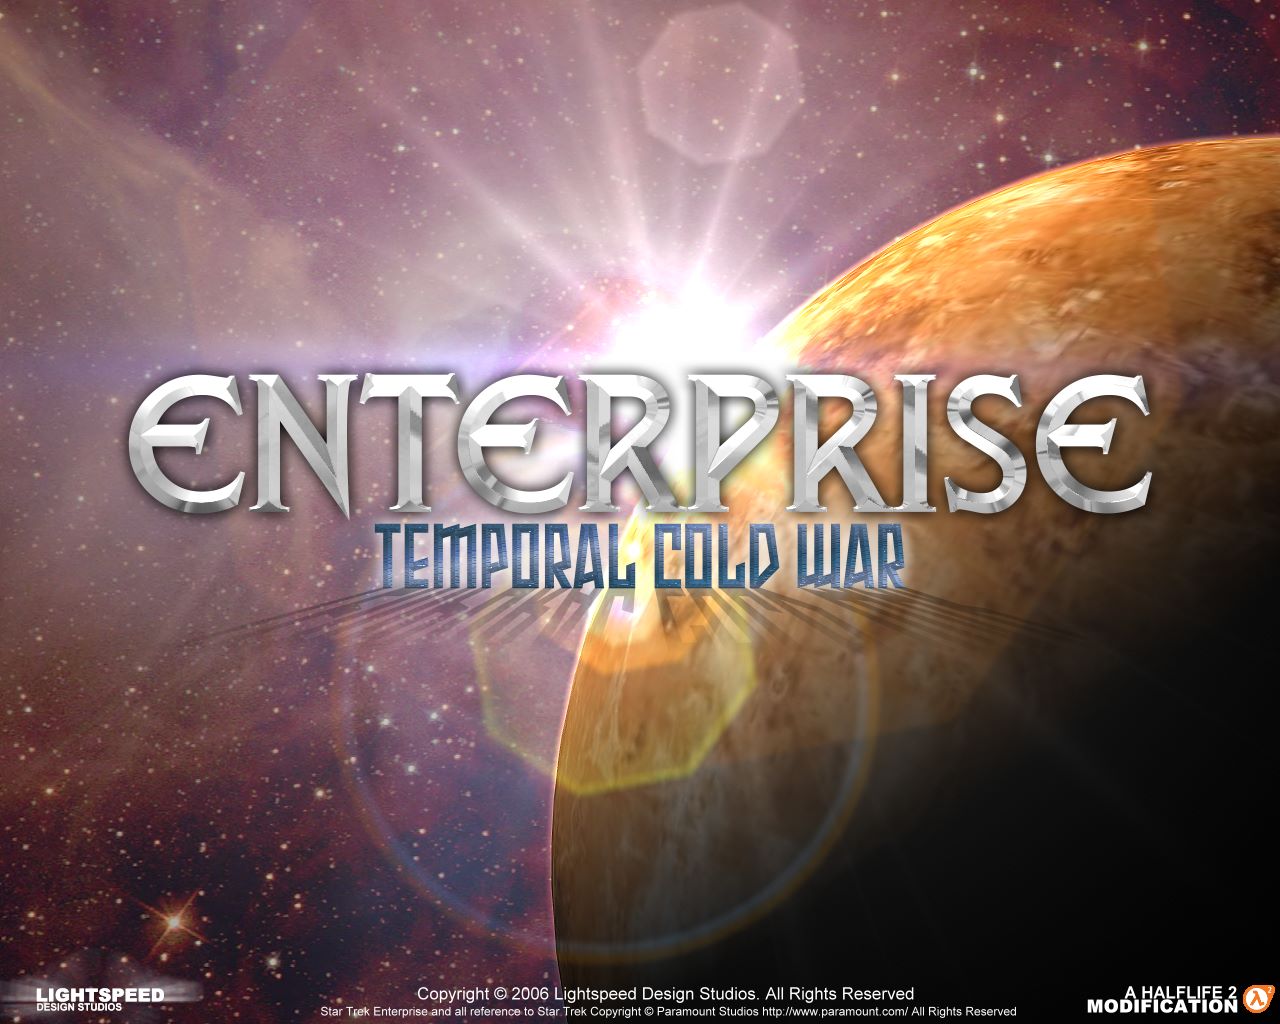 Enterprise temporal cold war episodes